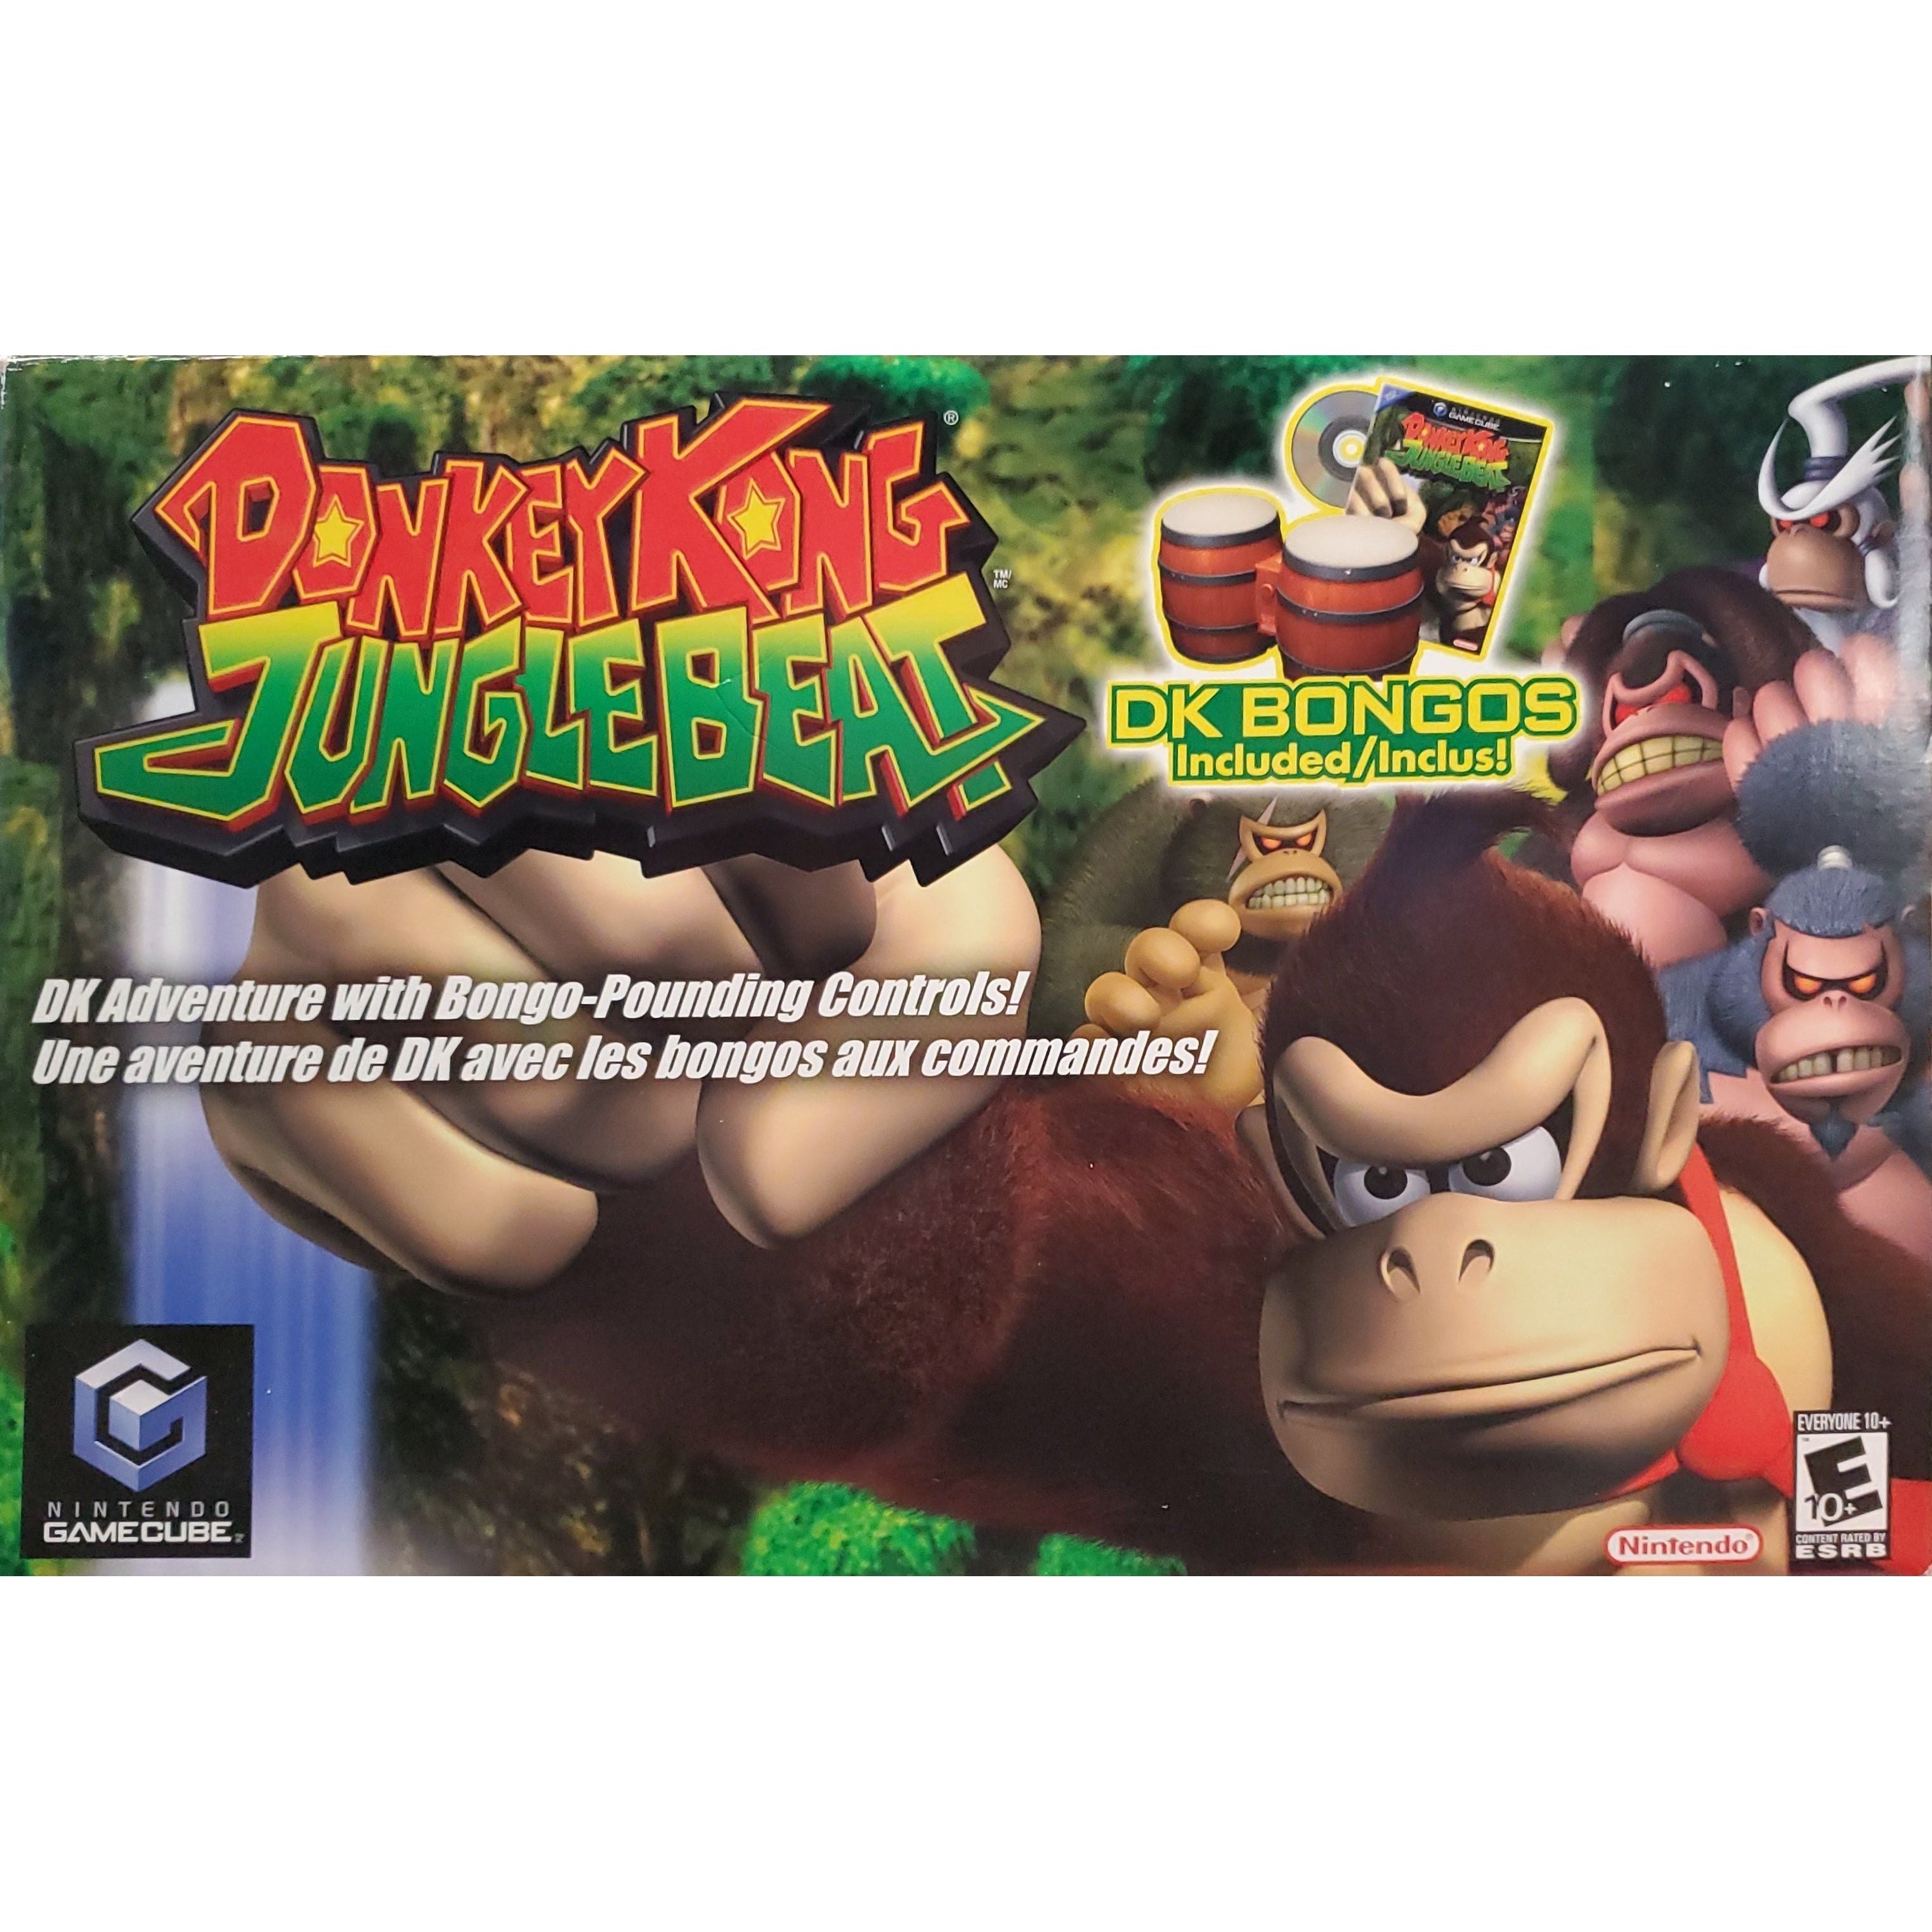 GameCube - Donkey Kong Jungle Beat DK Bongos (With Game)